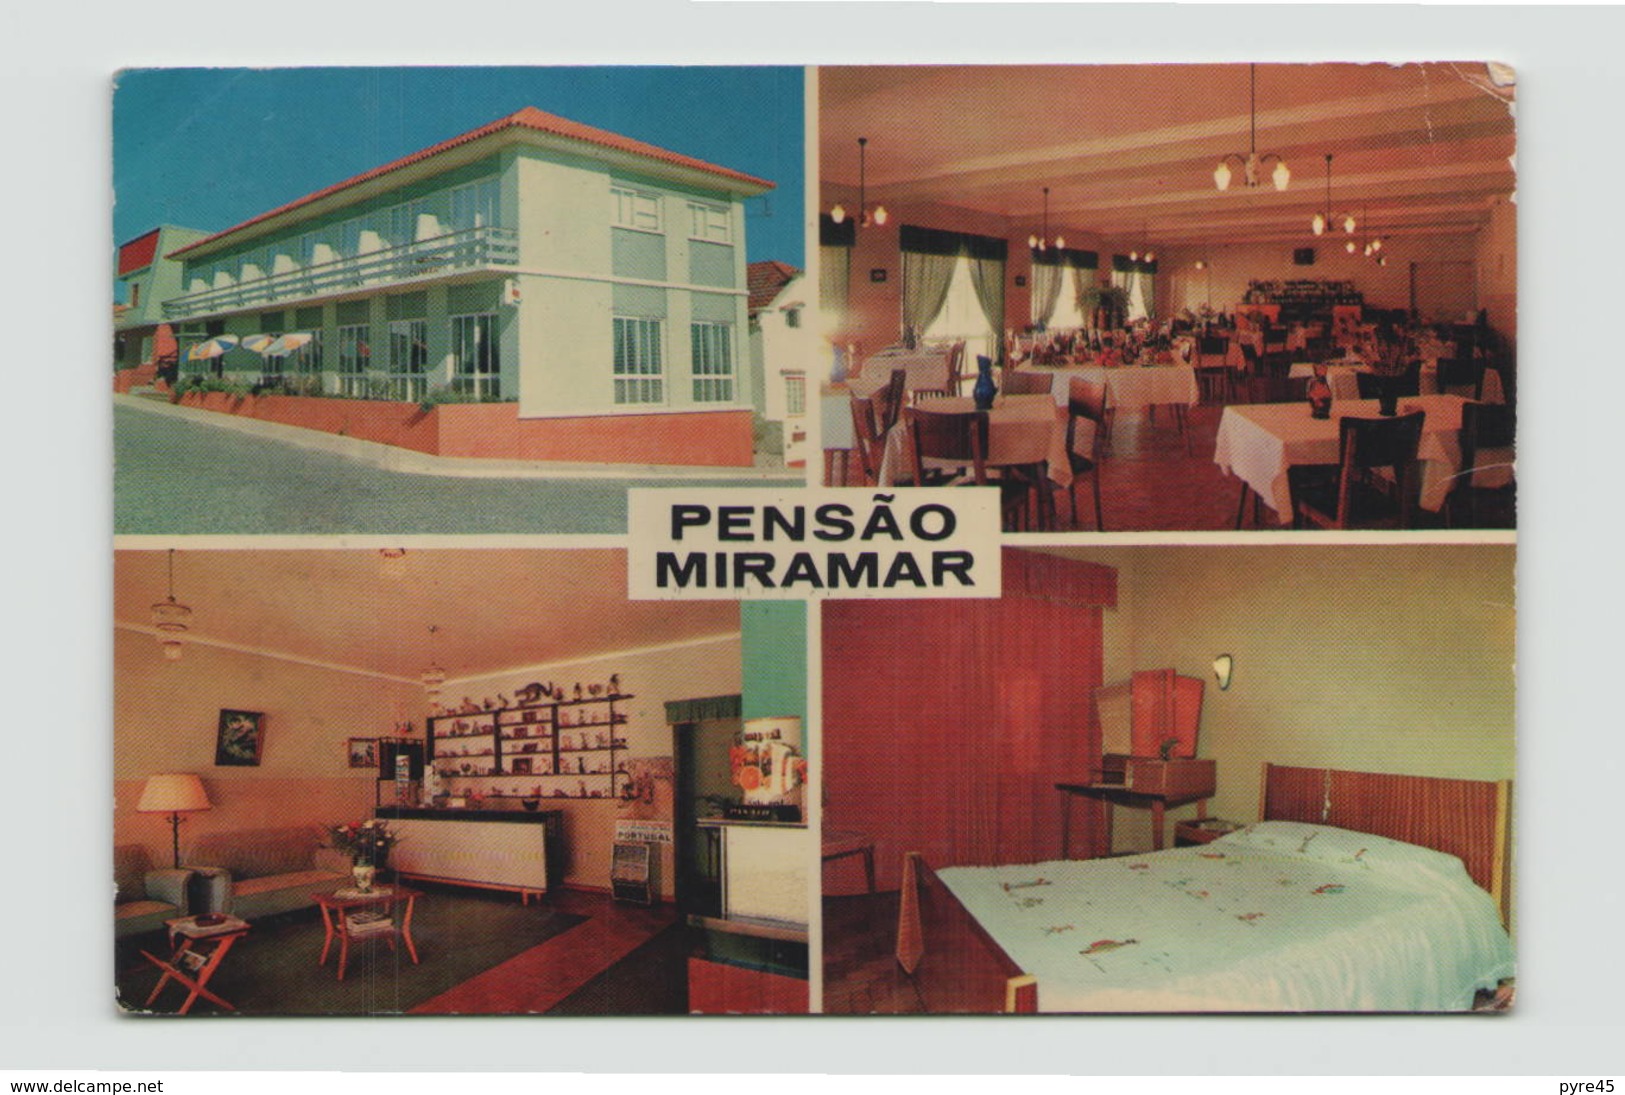 PENSAO MIRAMAR PLIURES AUX COINS - Hotels & Restaurants